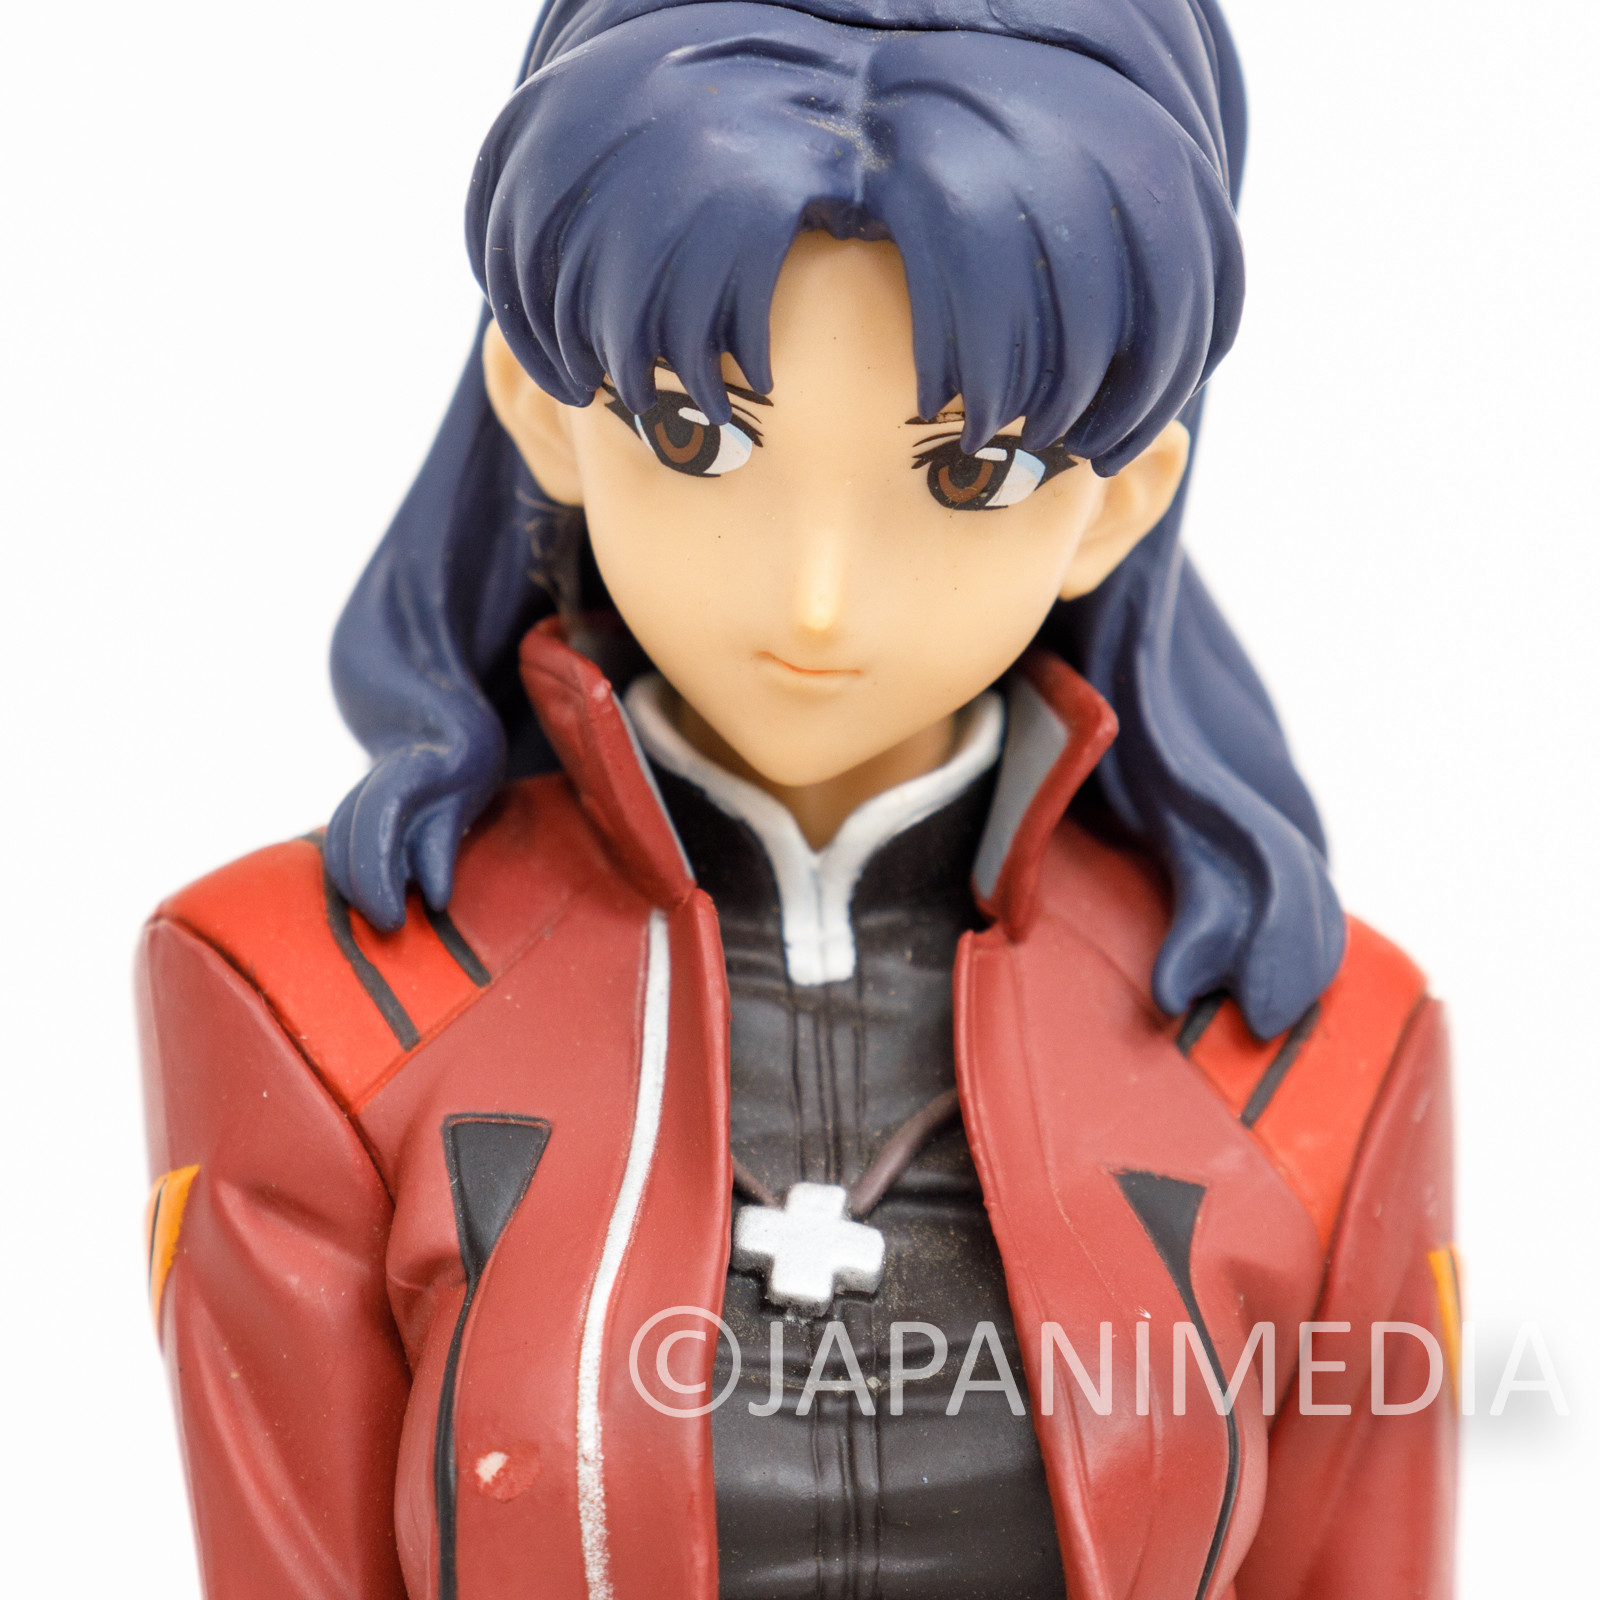 JUNK ITEM/Damaged] Evangelion Misato BOX Extra Katsuragi NO Figure Japanimedia JAPAN Store - SEGA